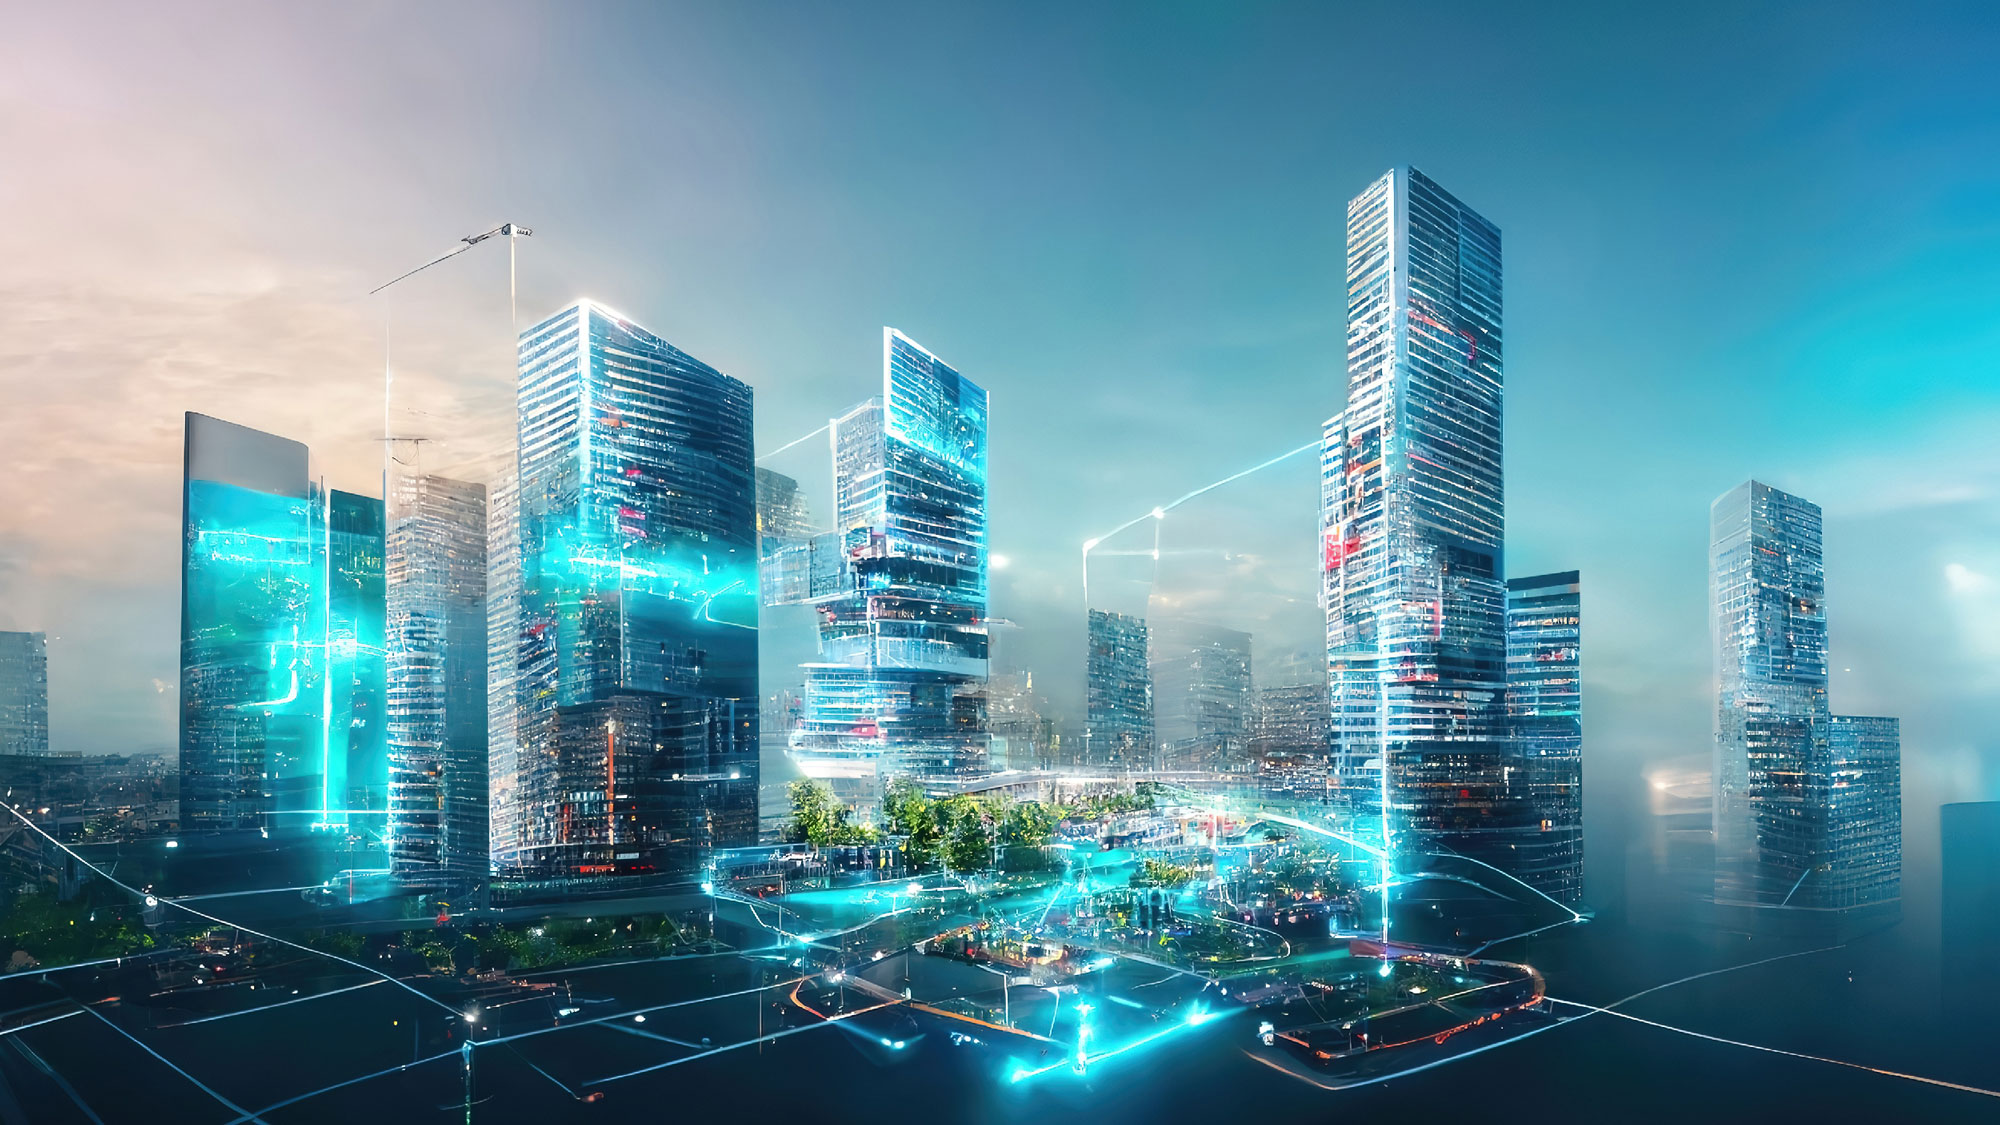 Smart City Technology